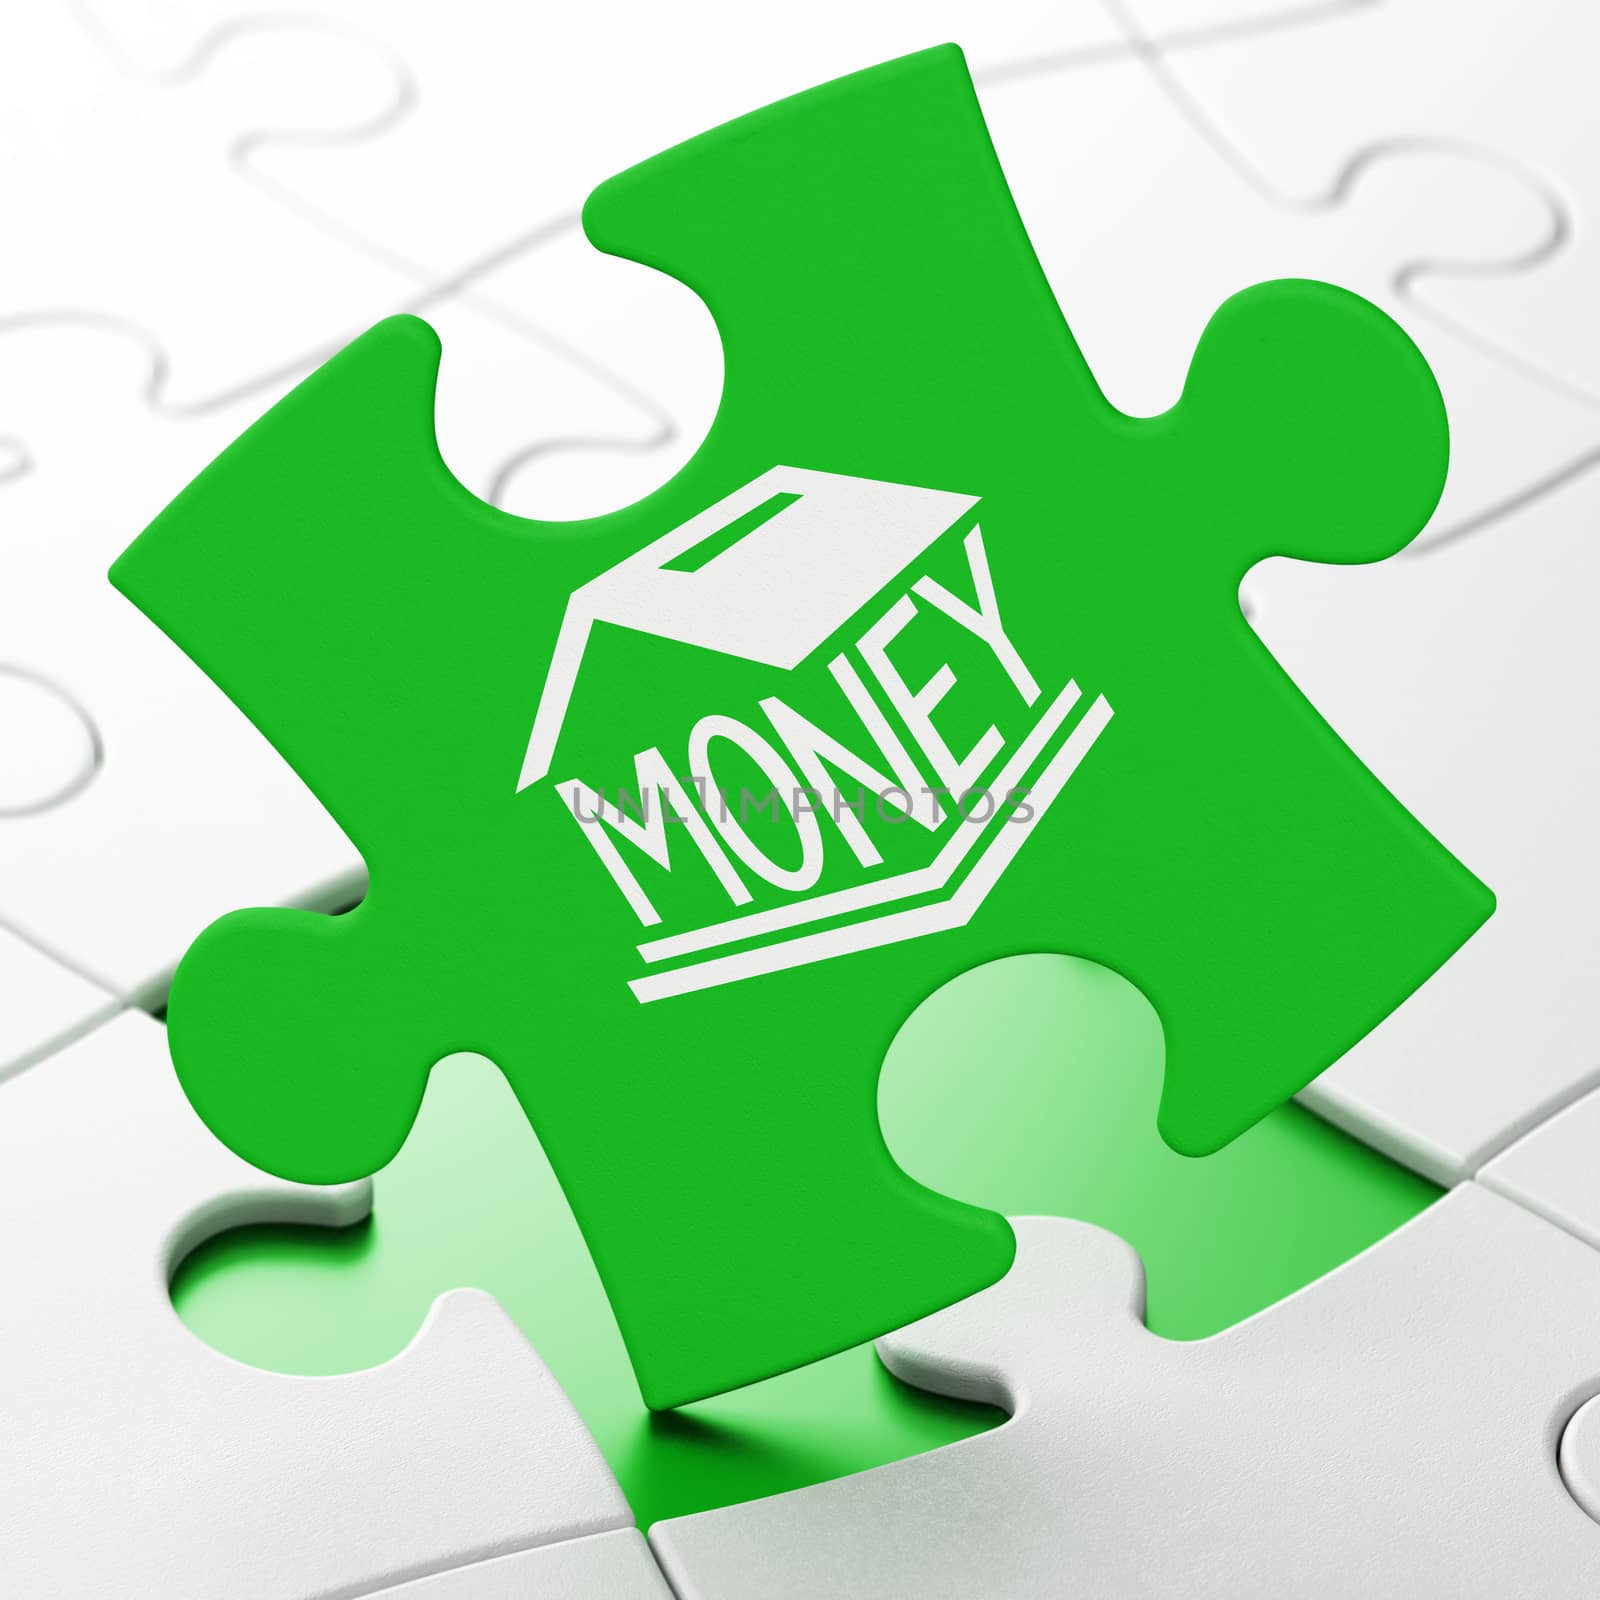 Banking concept: Money Box on puzzle background by maxkabakov